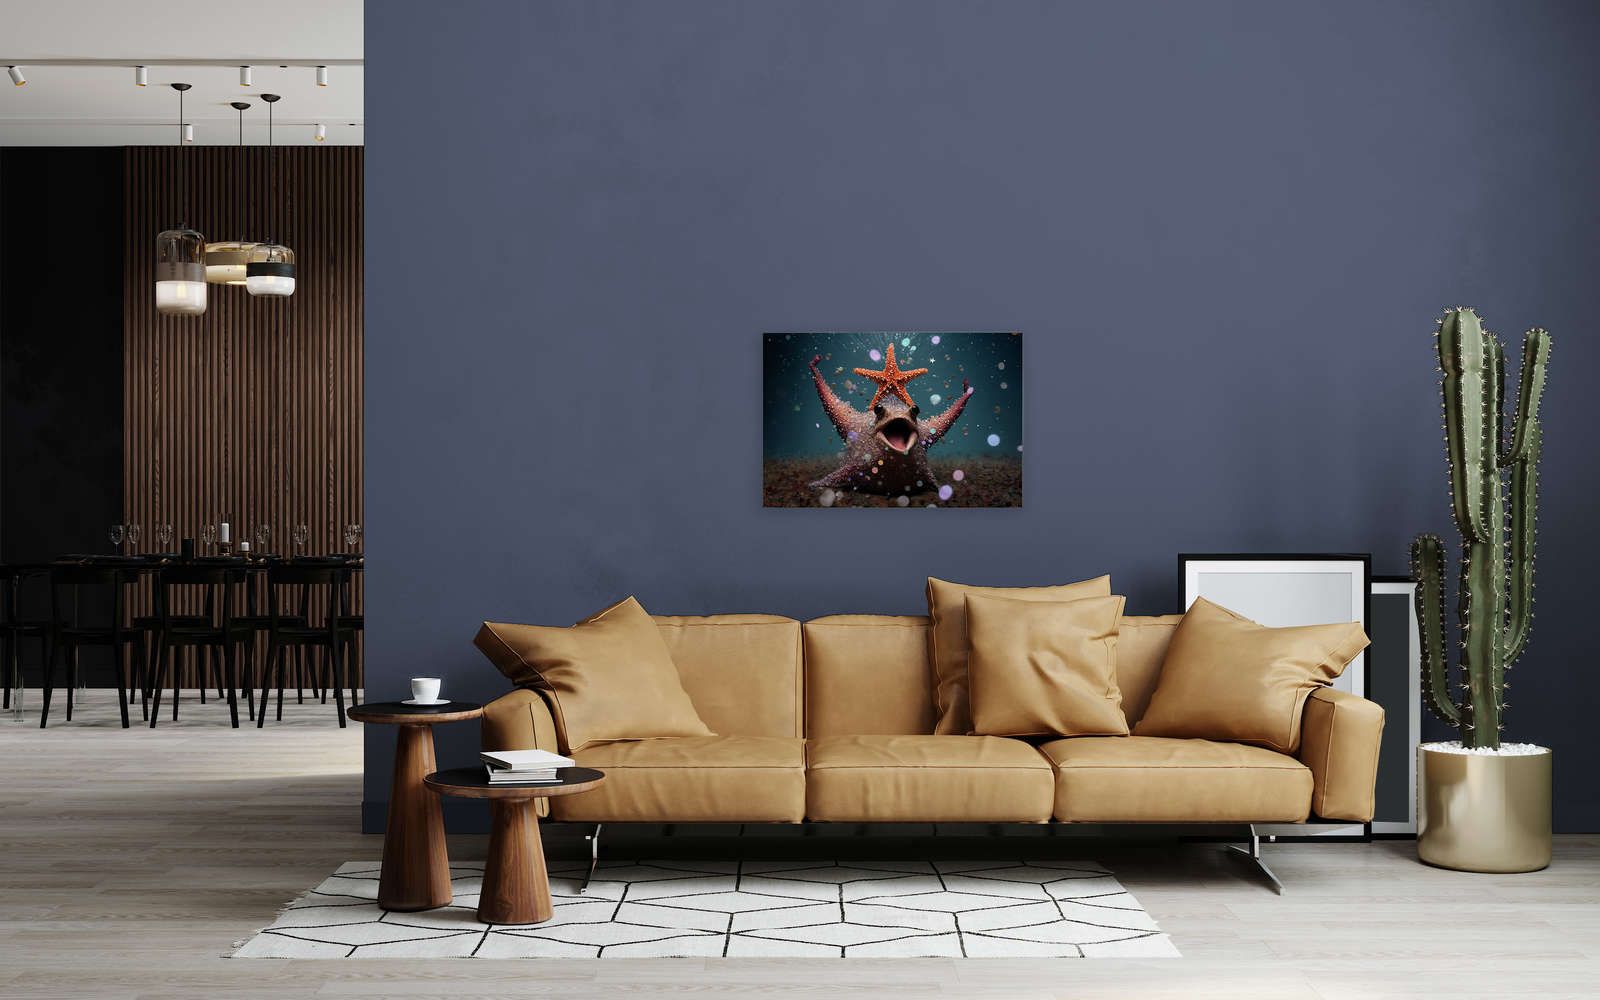             KI Canvas painting »party starfish« - 90 cm x 60 cm
        